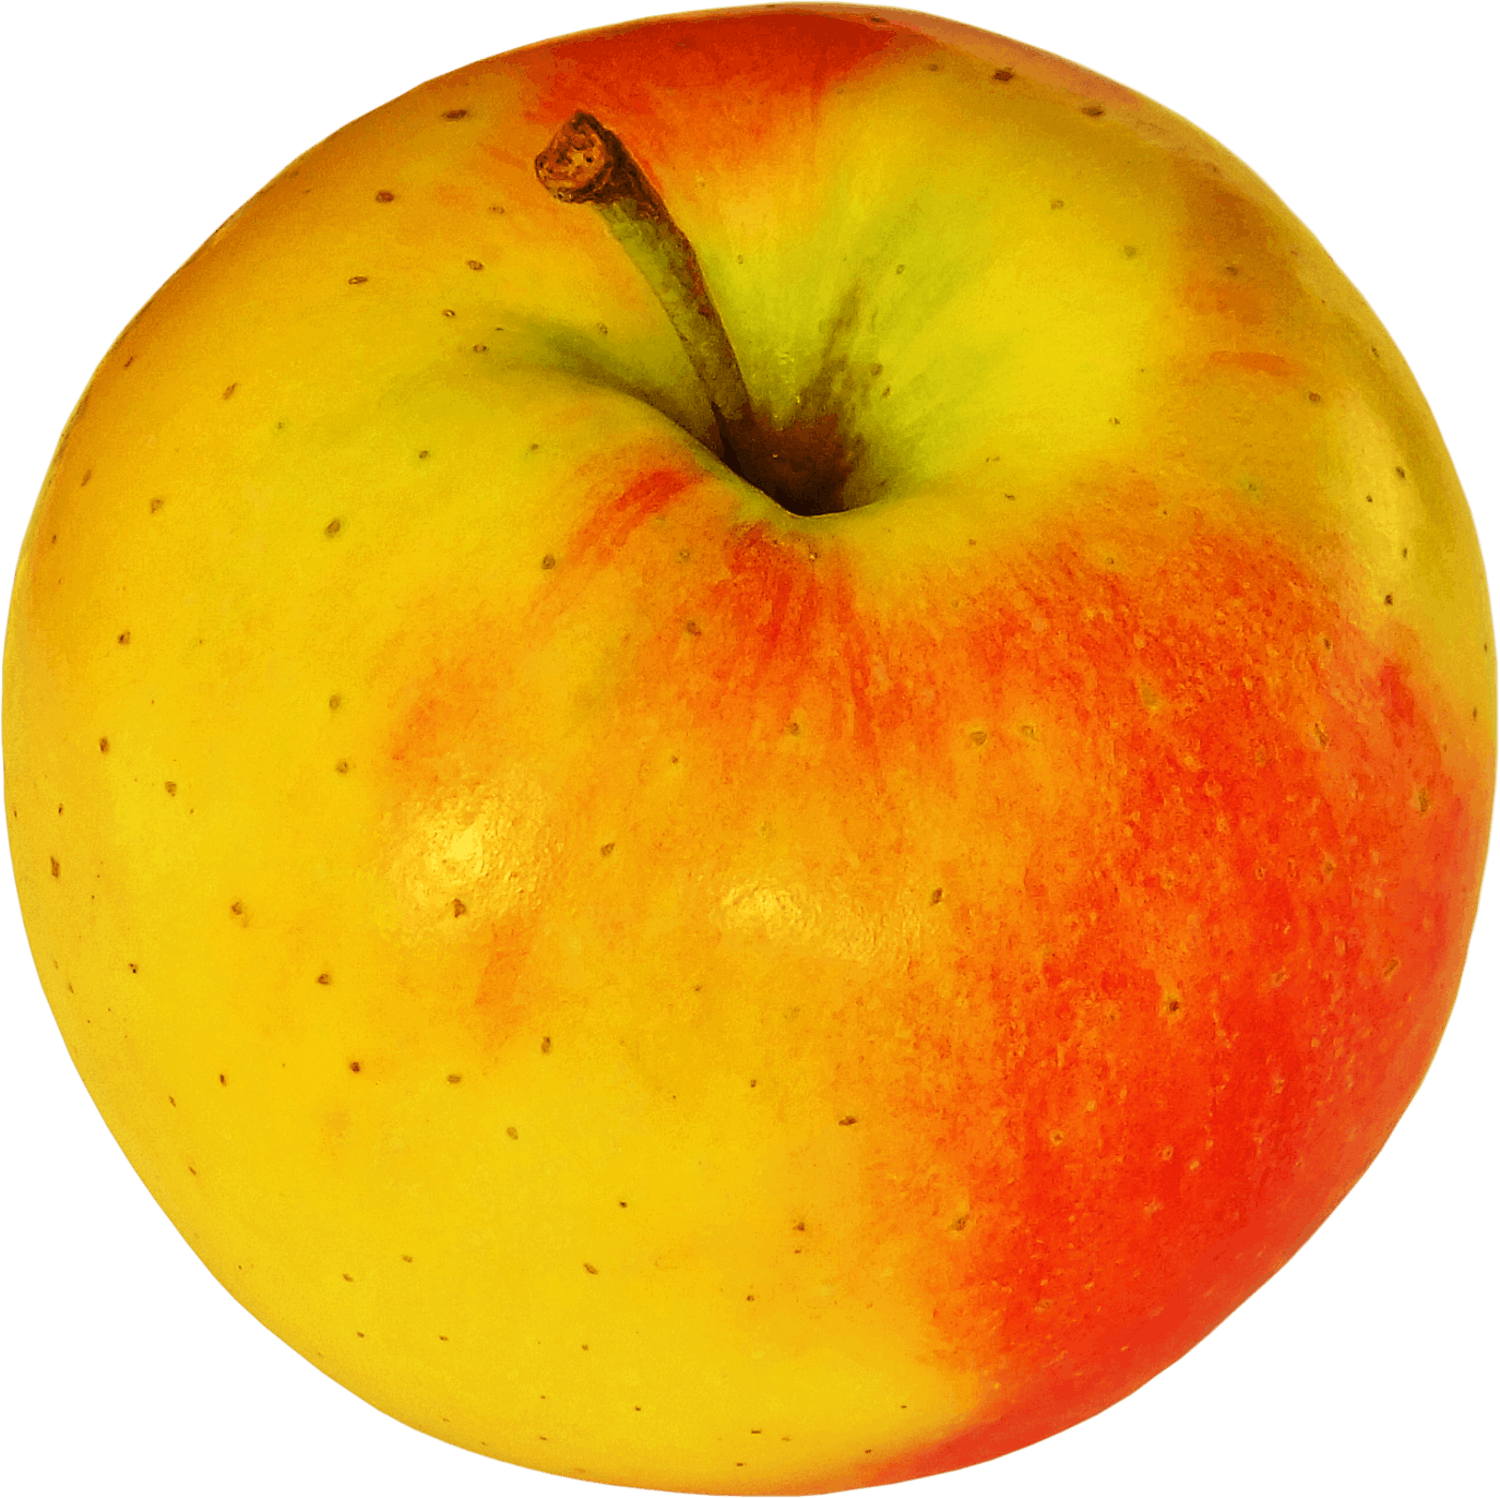 easy-method-for-preserving-fresh-apples-hubpages